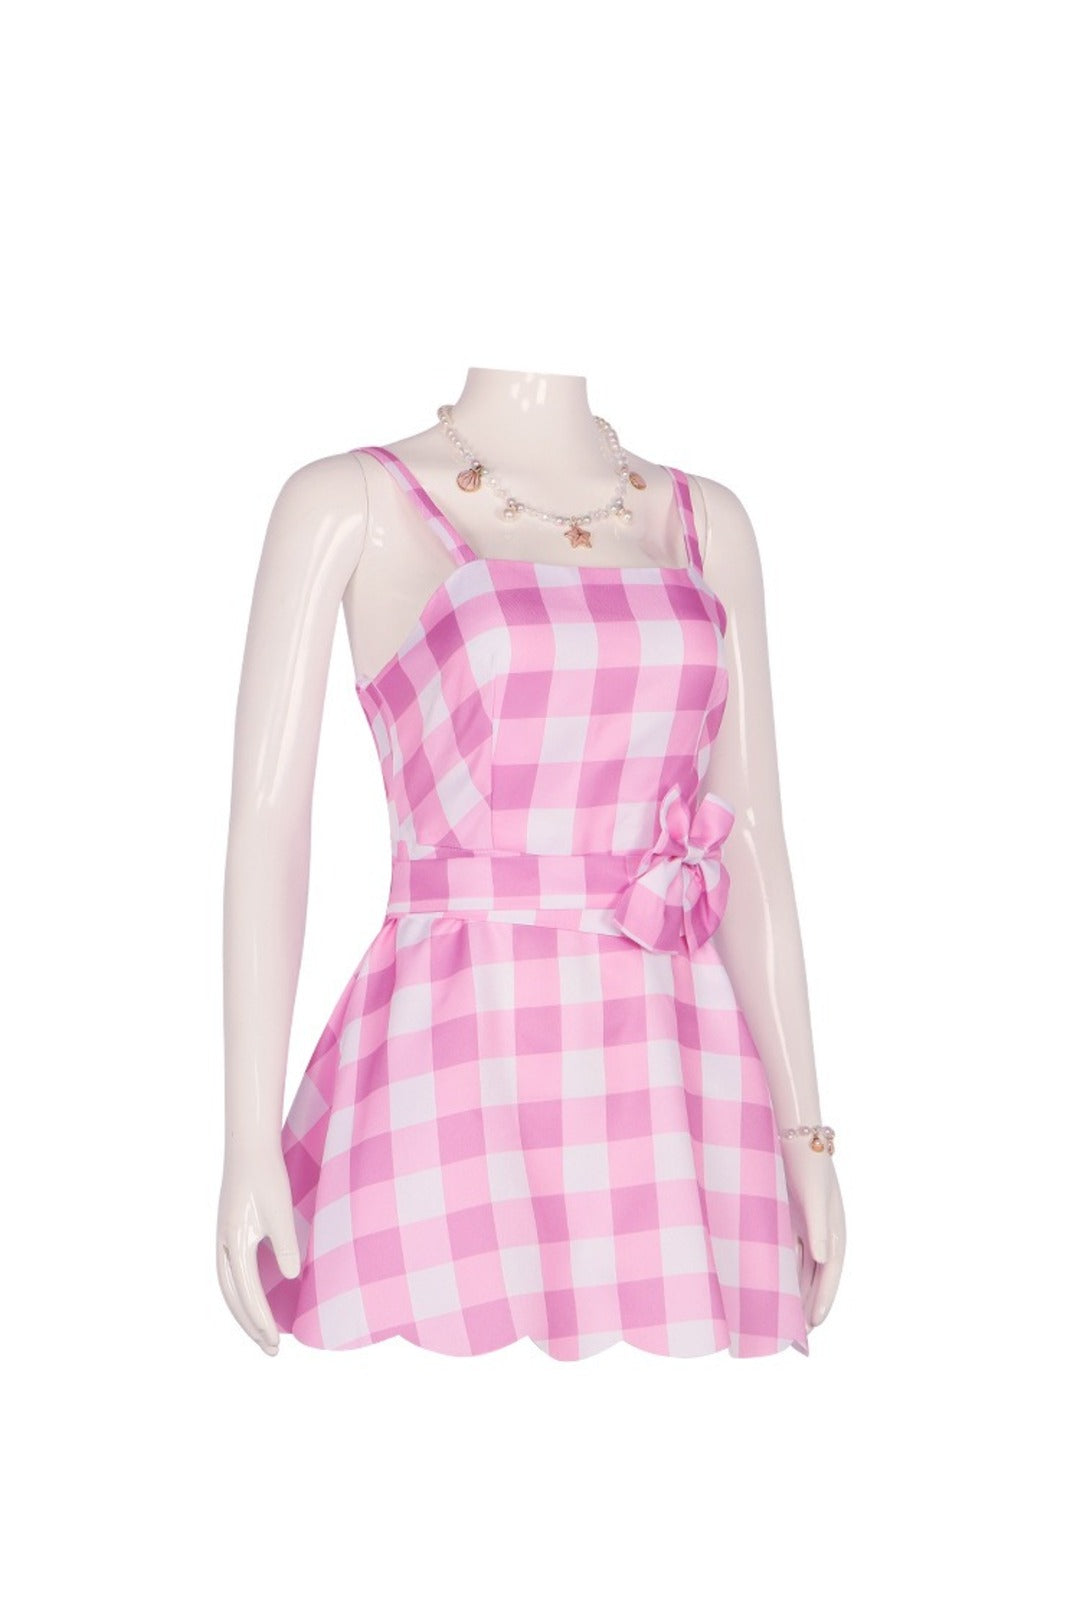 Barbie Pink Gingham Dress Cosplay